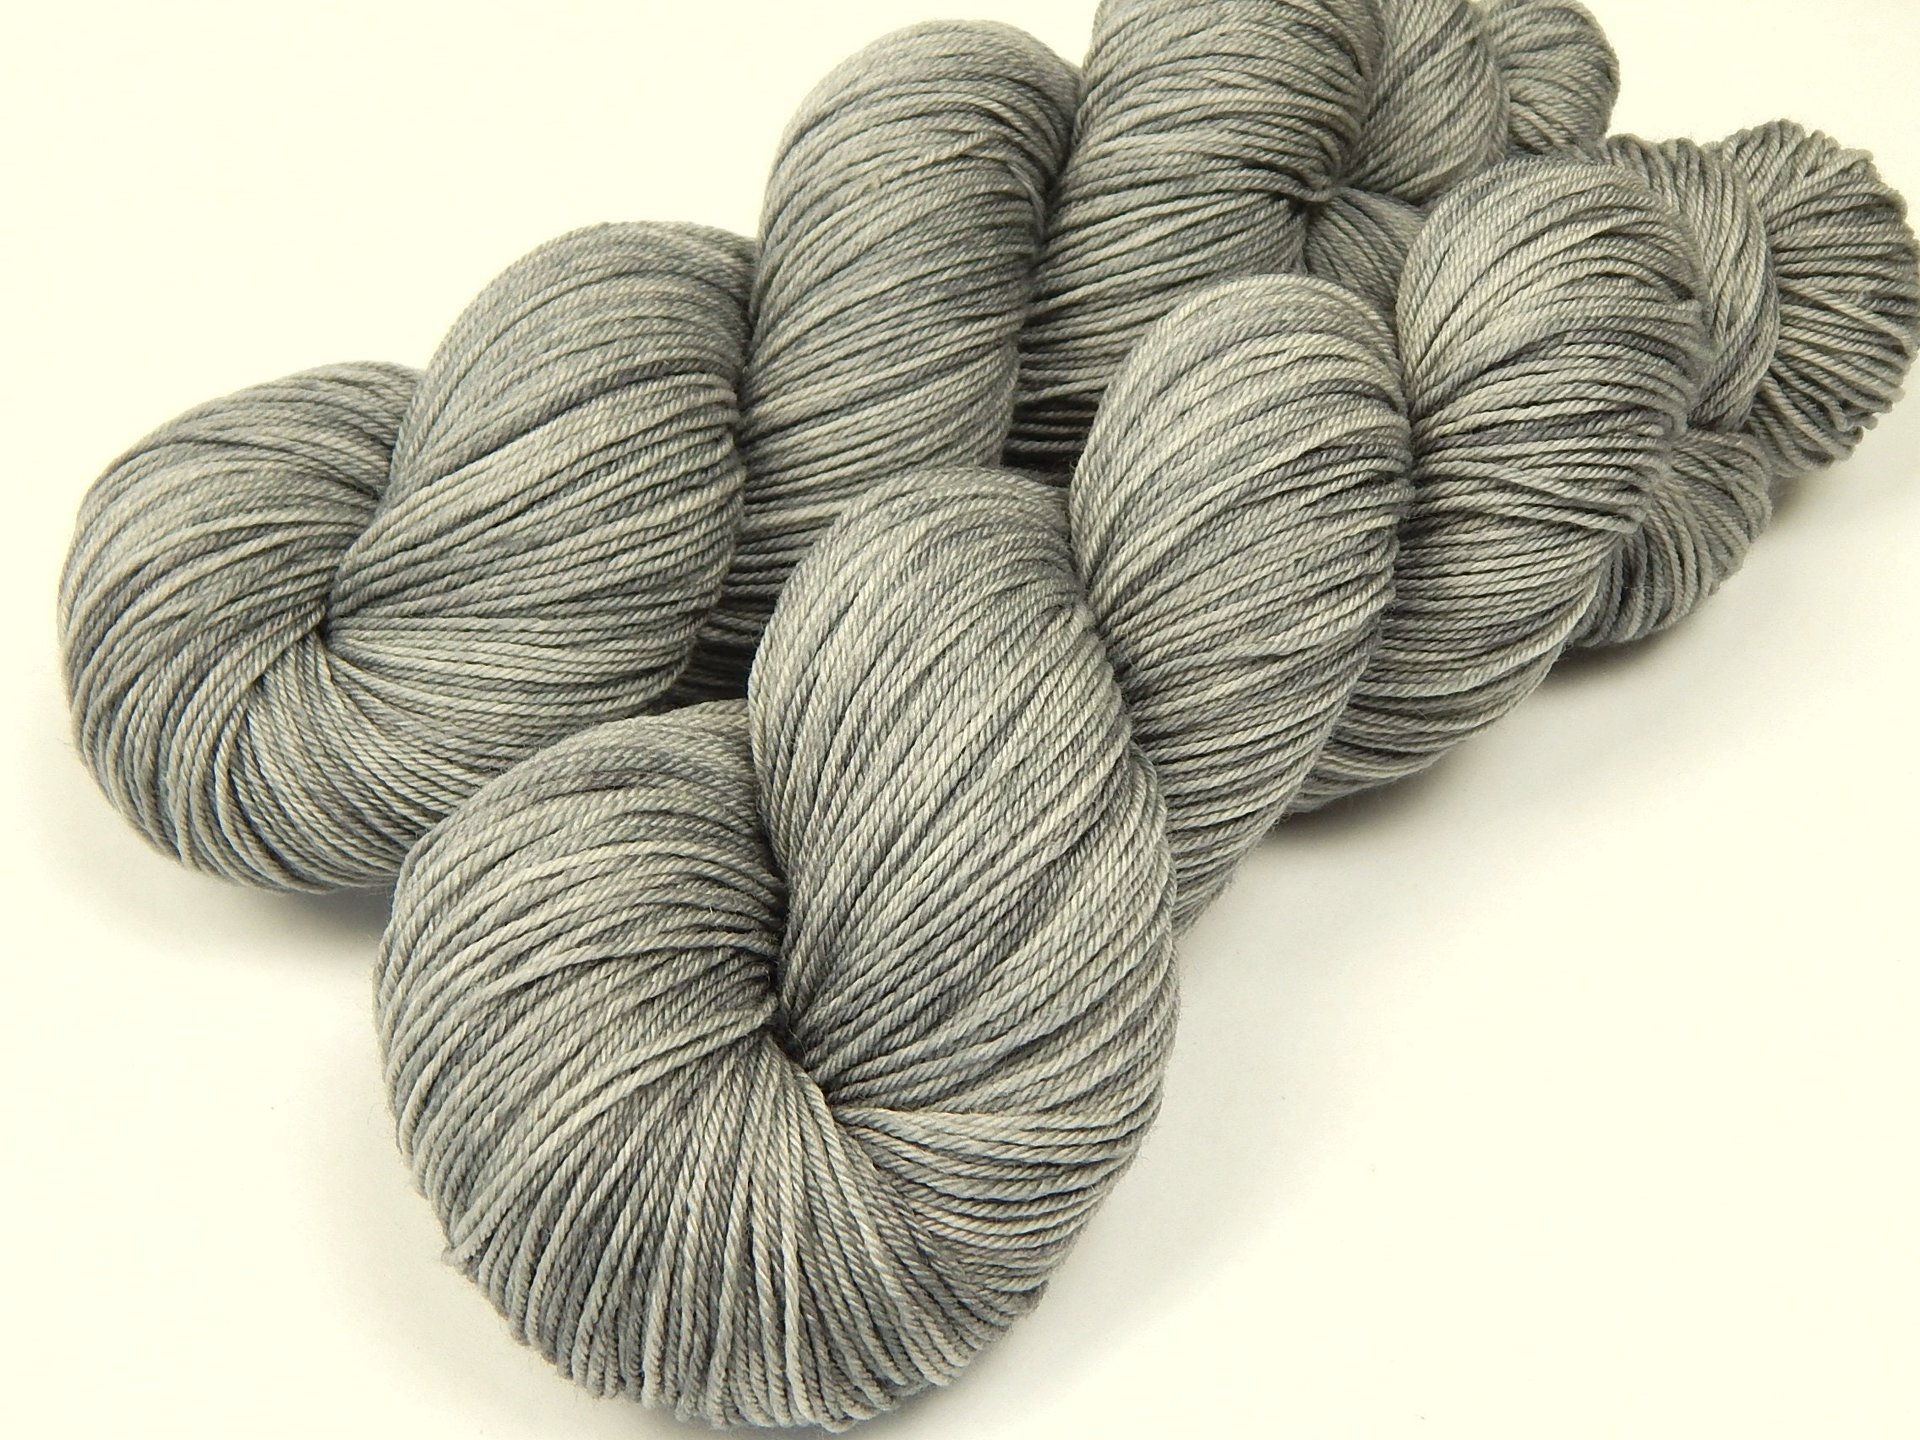 Hand Dyed Yarn, Sock Fingering Weight 4 Ply Superwash Merino Wool - Silver Lining - Light Grey Gray Tonal Knitting Yarn, Hand Dyed Sock Yarn